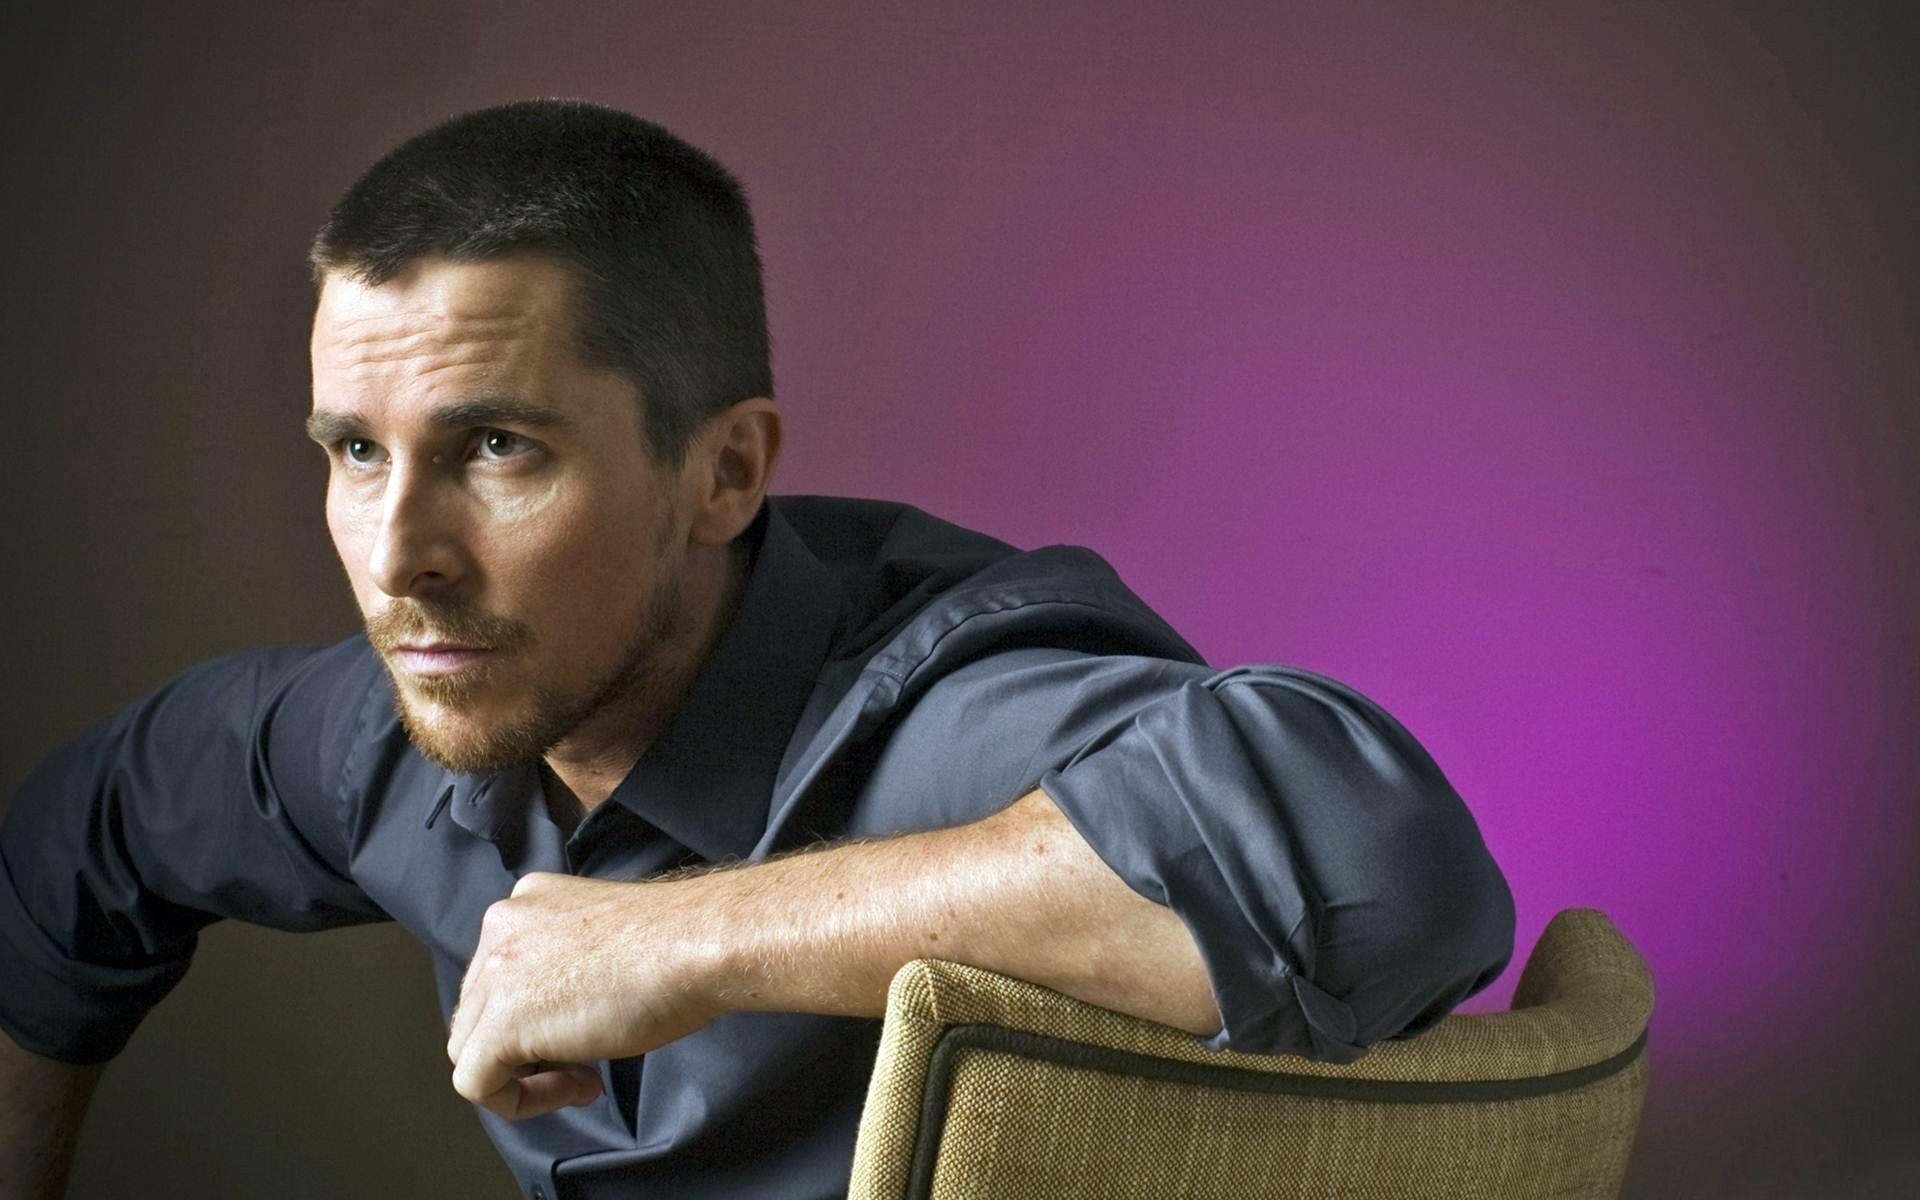 Christian Bale 2014 HD Wallpaper, Background Image